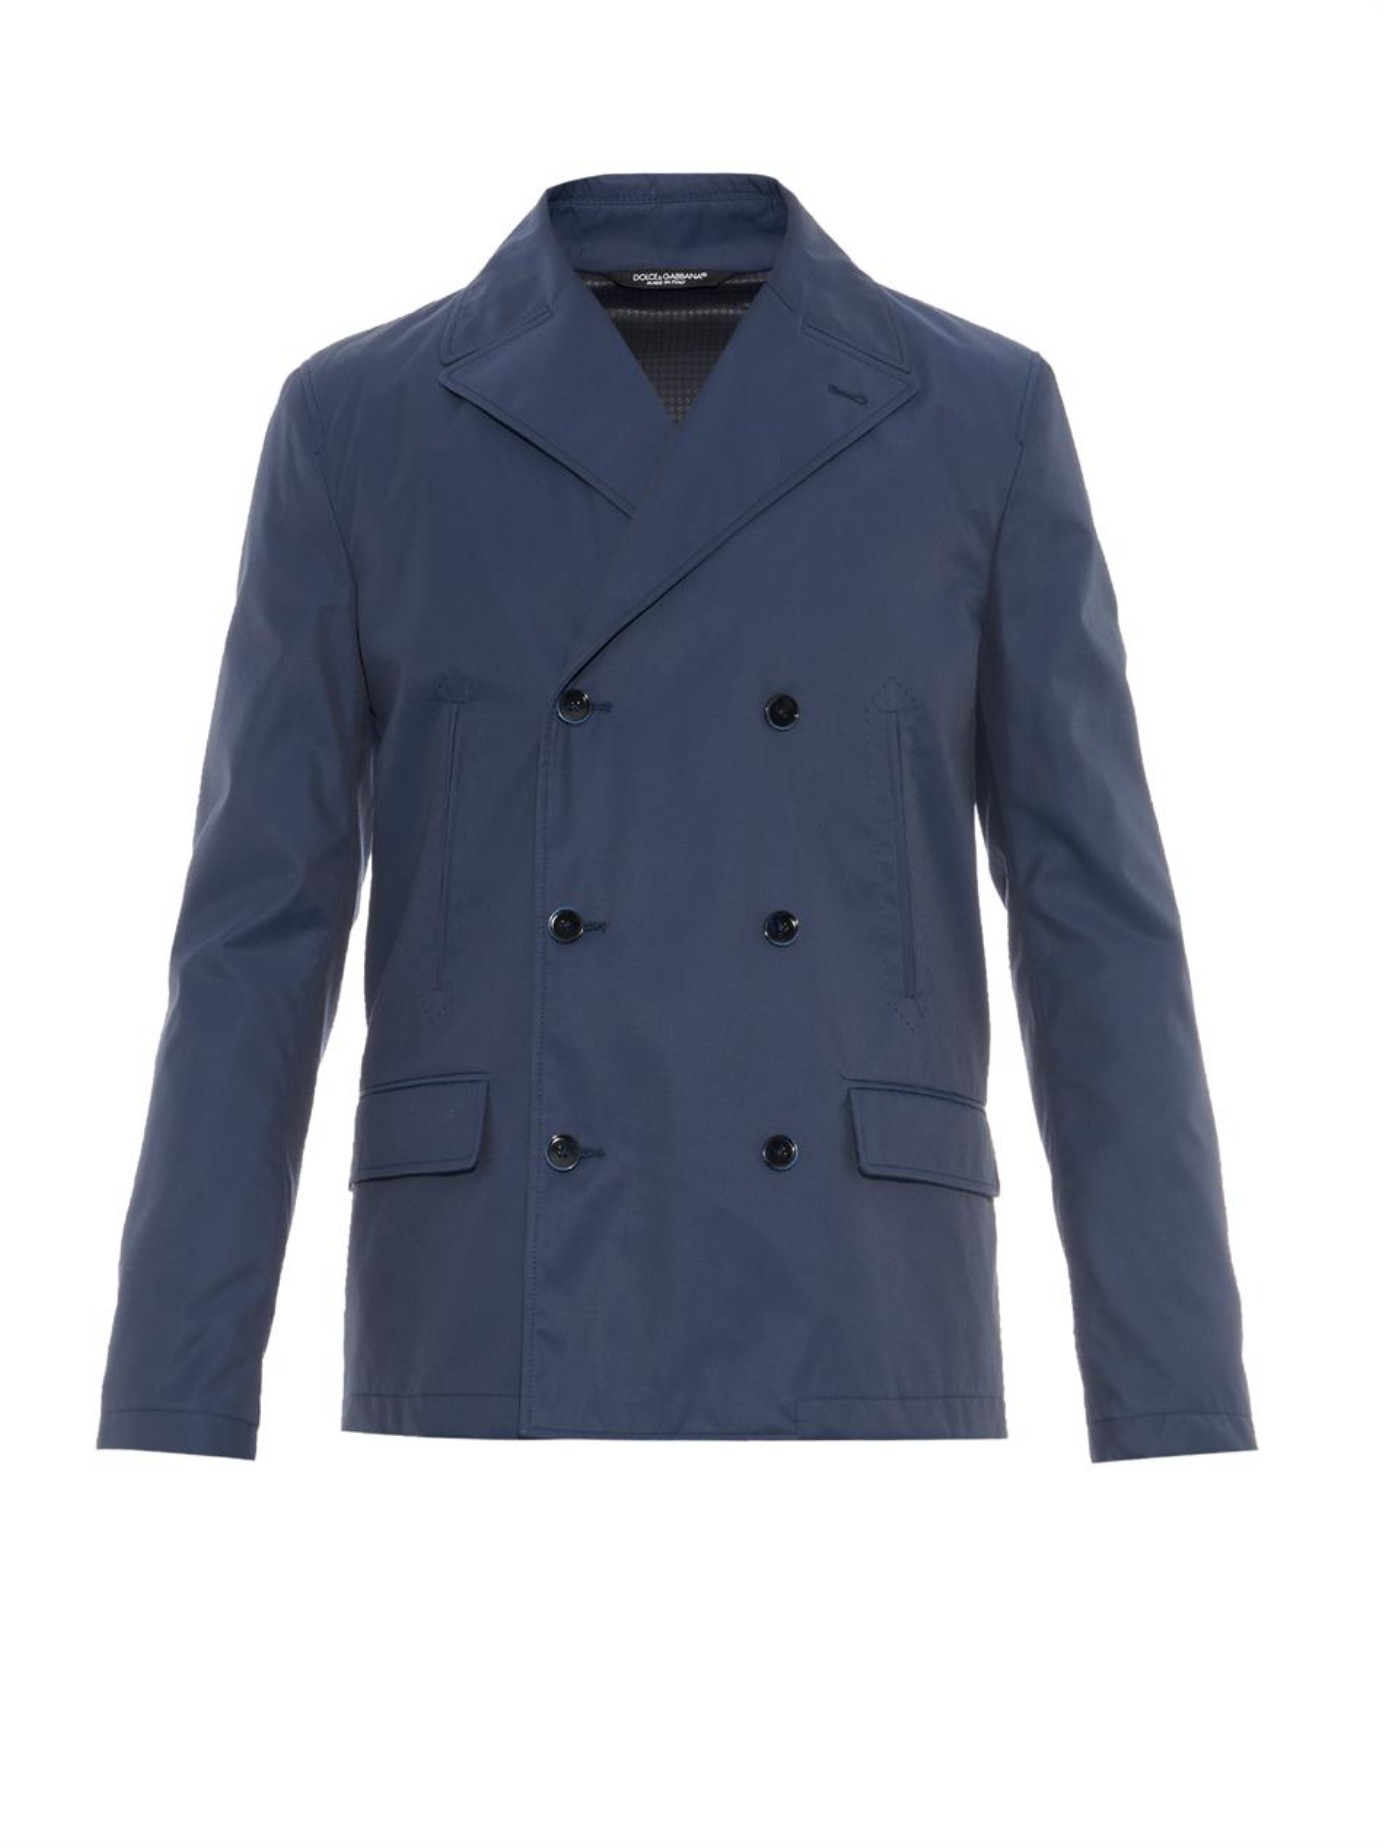 Lyst - Dolce & Gabbana Lightweight Twill Pea Coat in Blue for Men